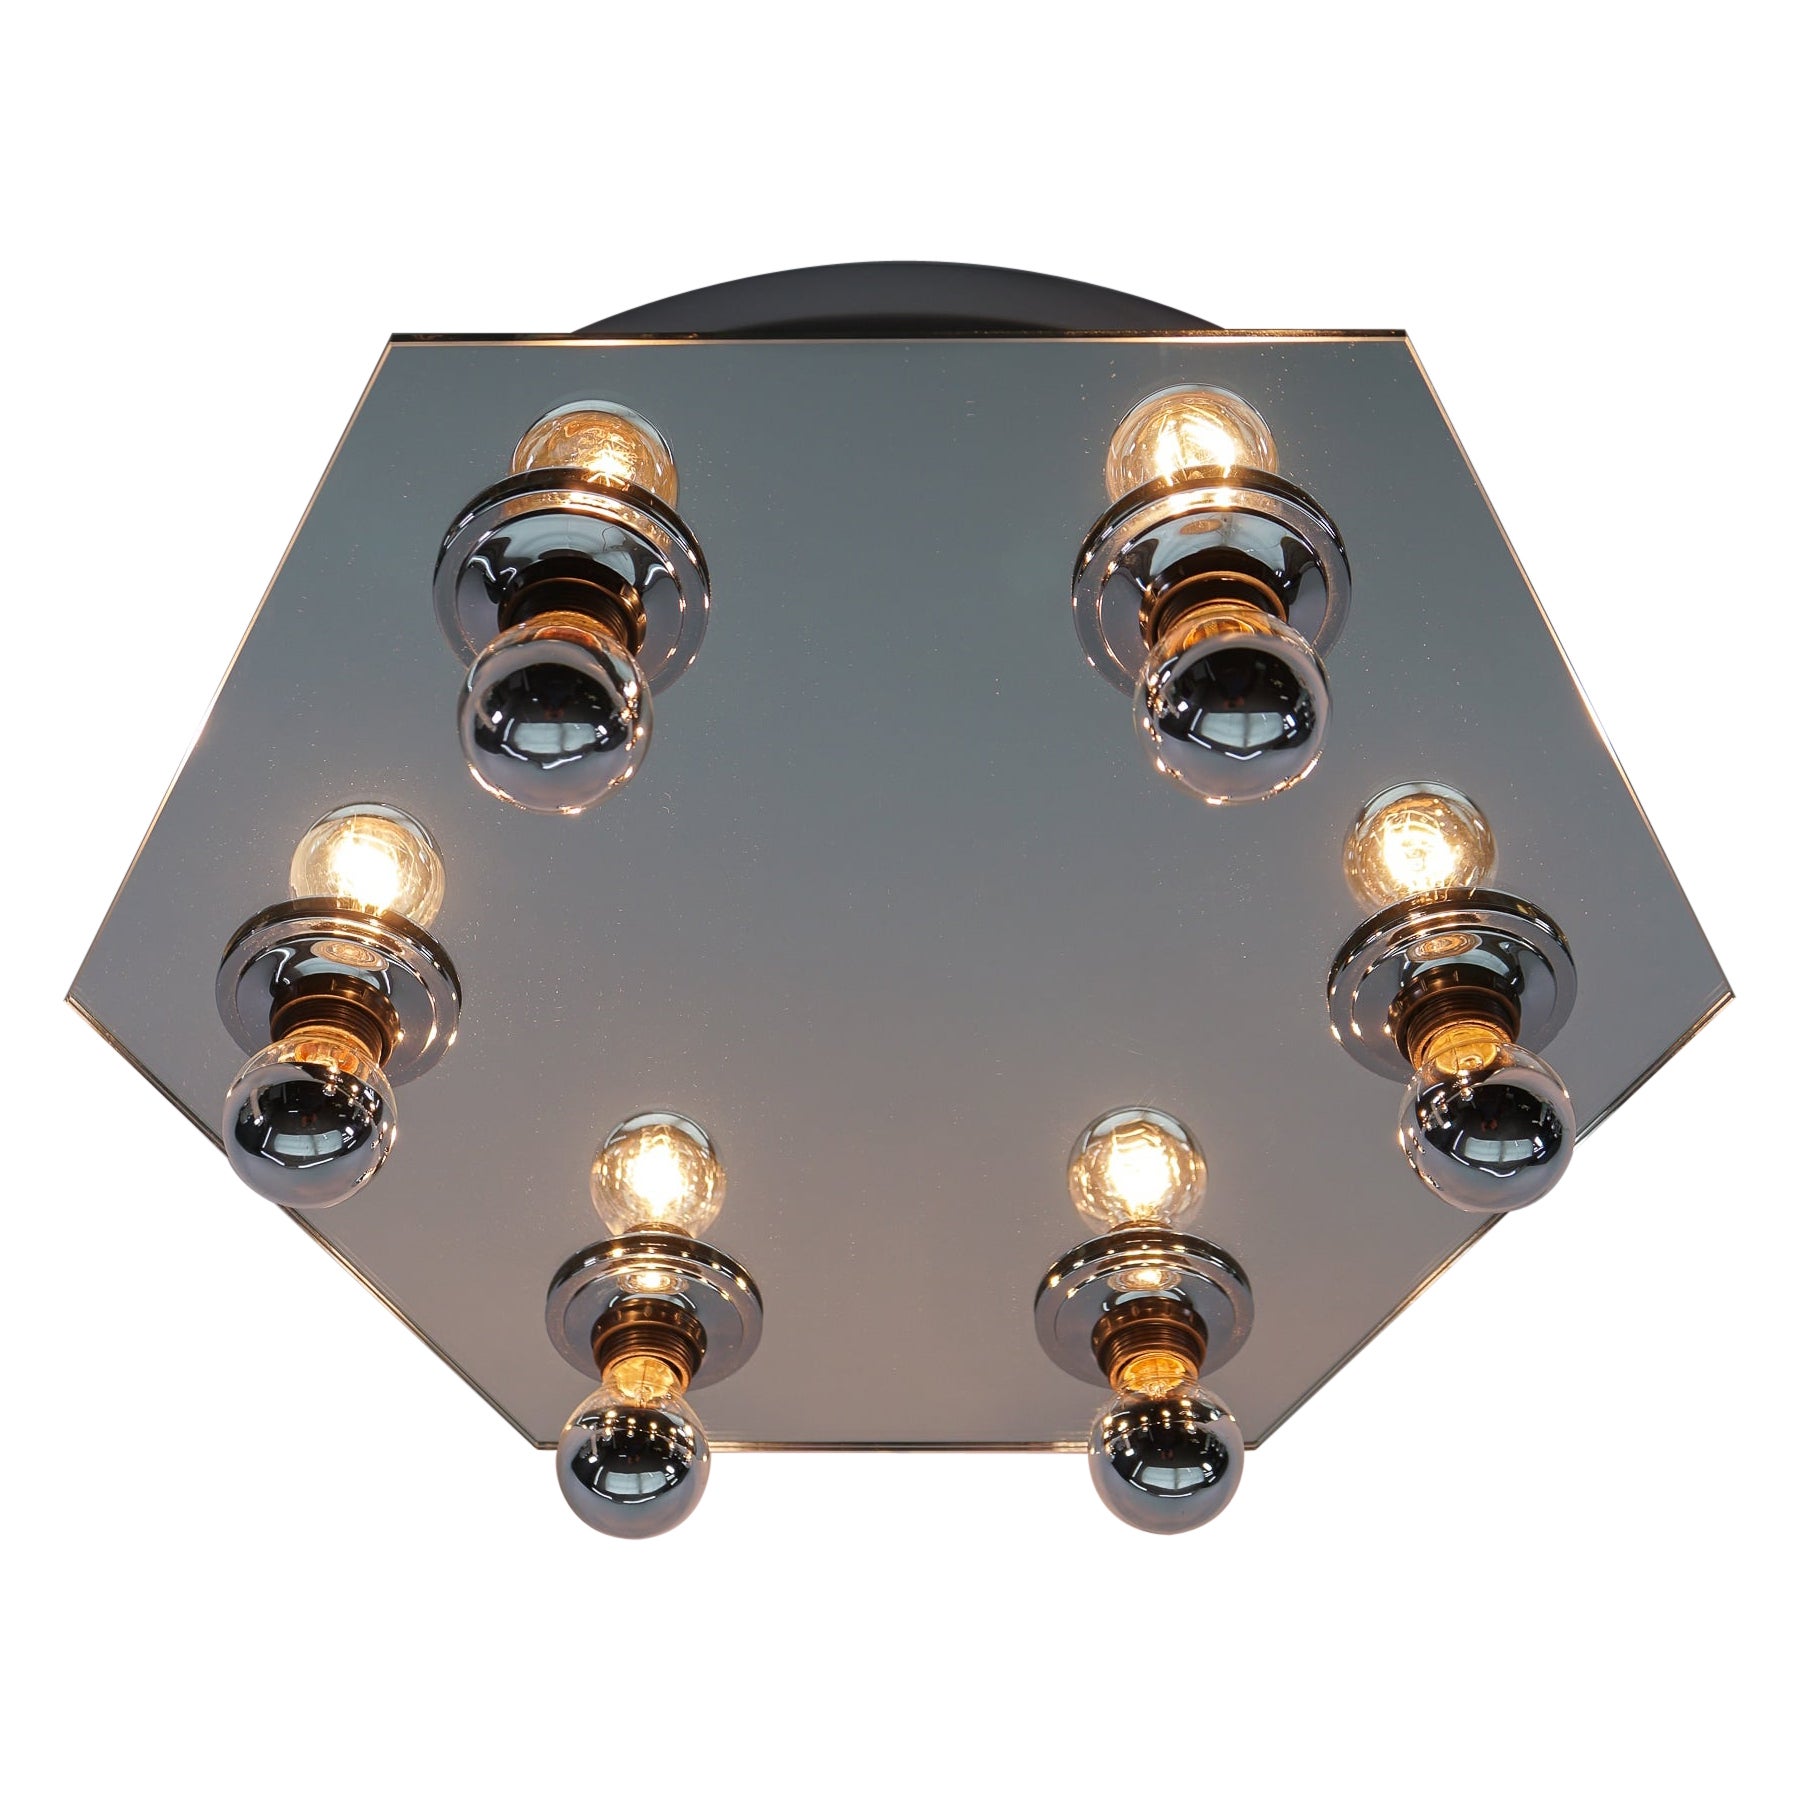 Hexagonal Mirrored Ceiling Lamp With Six Light Bulbs, 1970s Italy